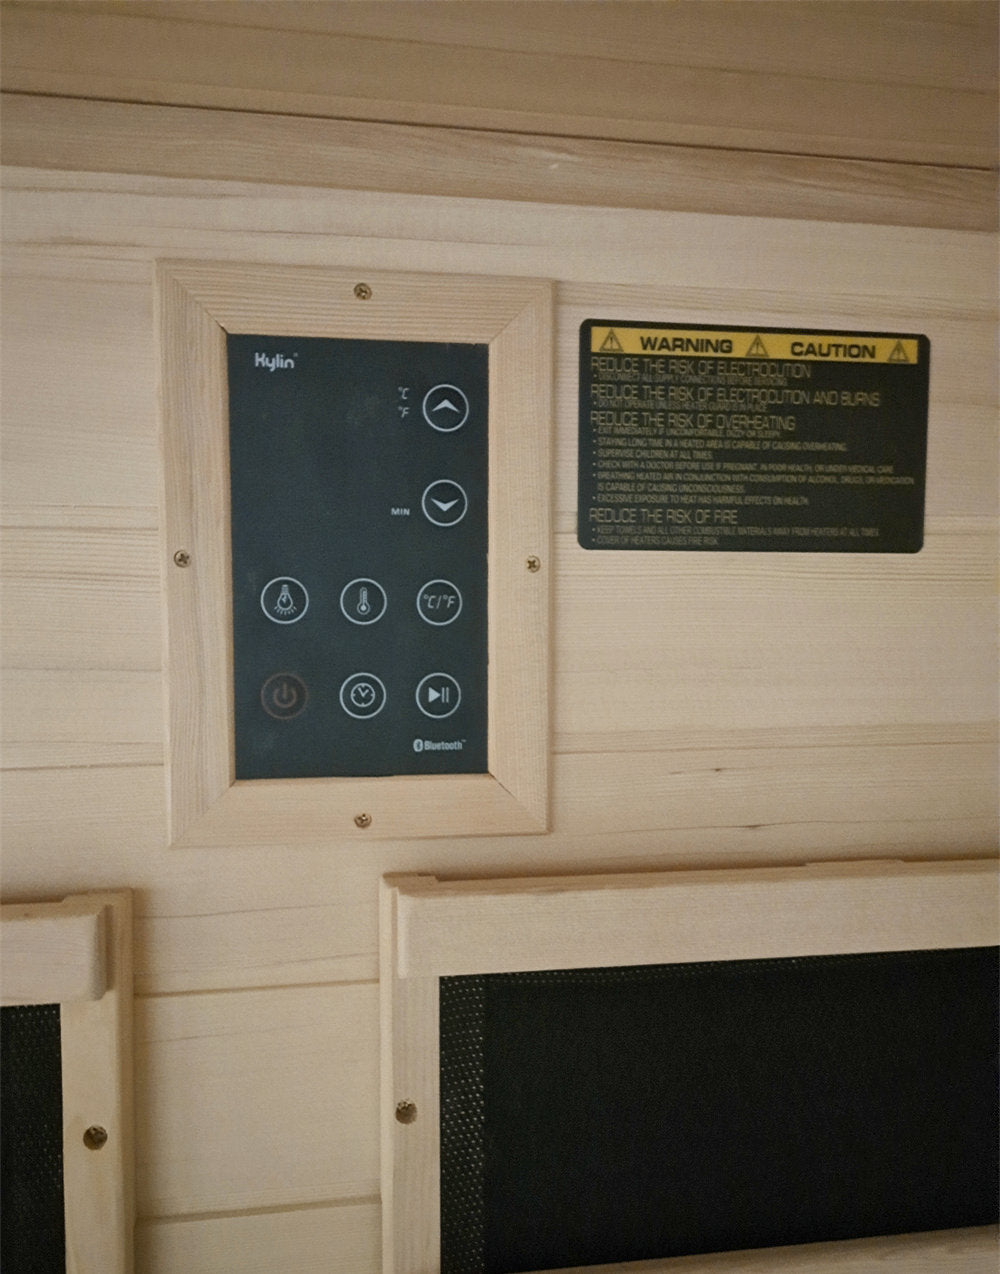 Kylin Superior Carbon Far Infrared Sauna Corner Room 4 person – KY-033LV